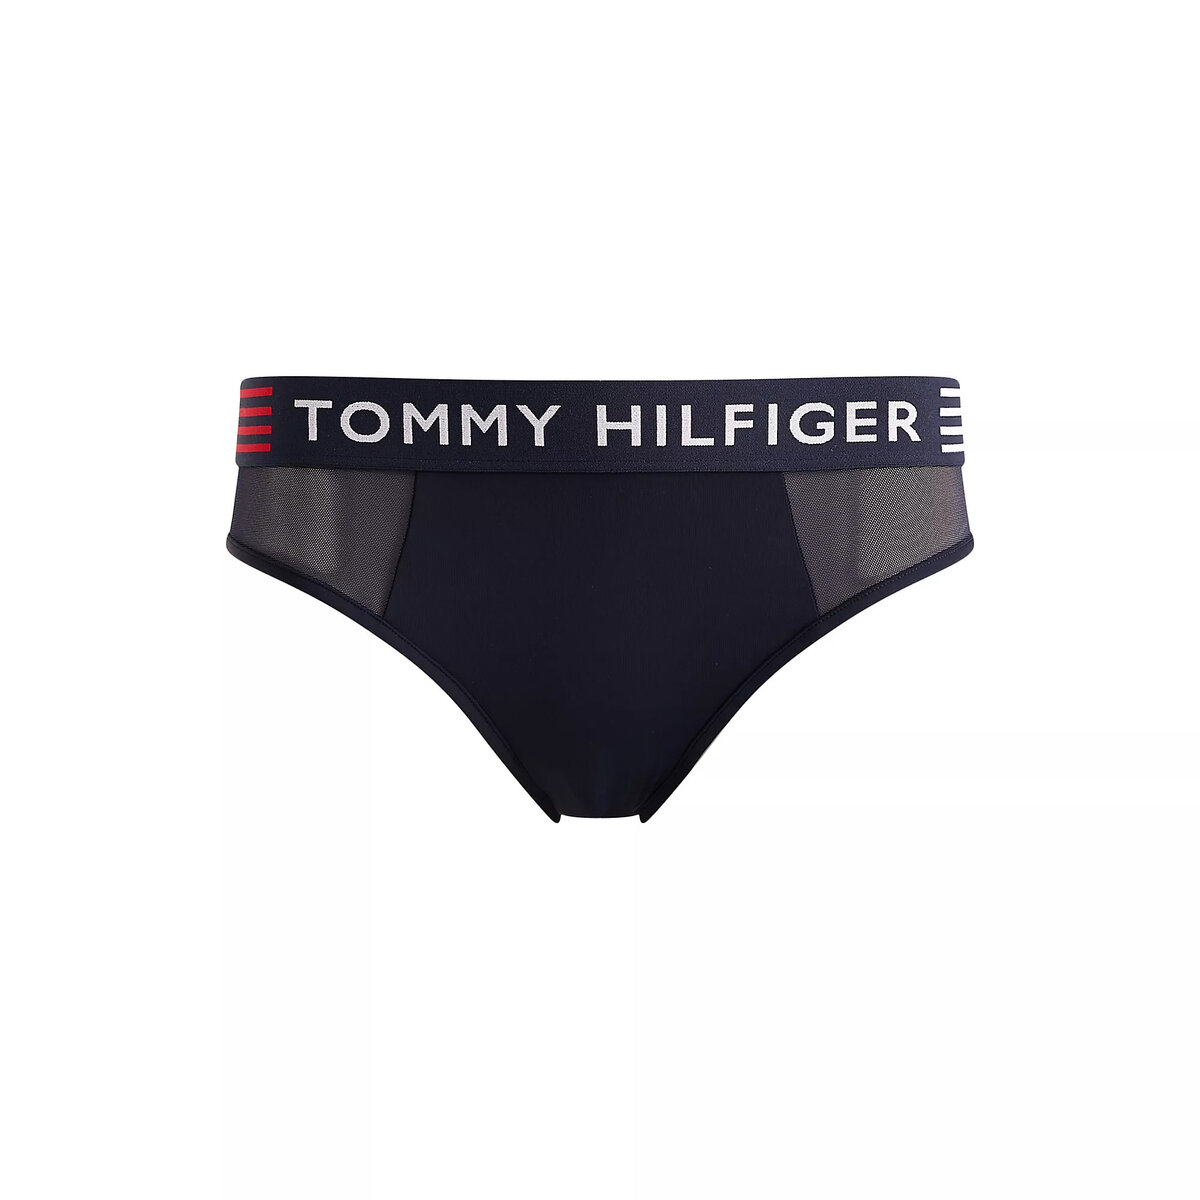 Flexibilní Dámské Bikiny - Tommy Hilfiger i652_UW0UW03541DW5001